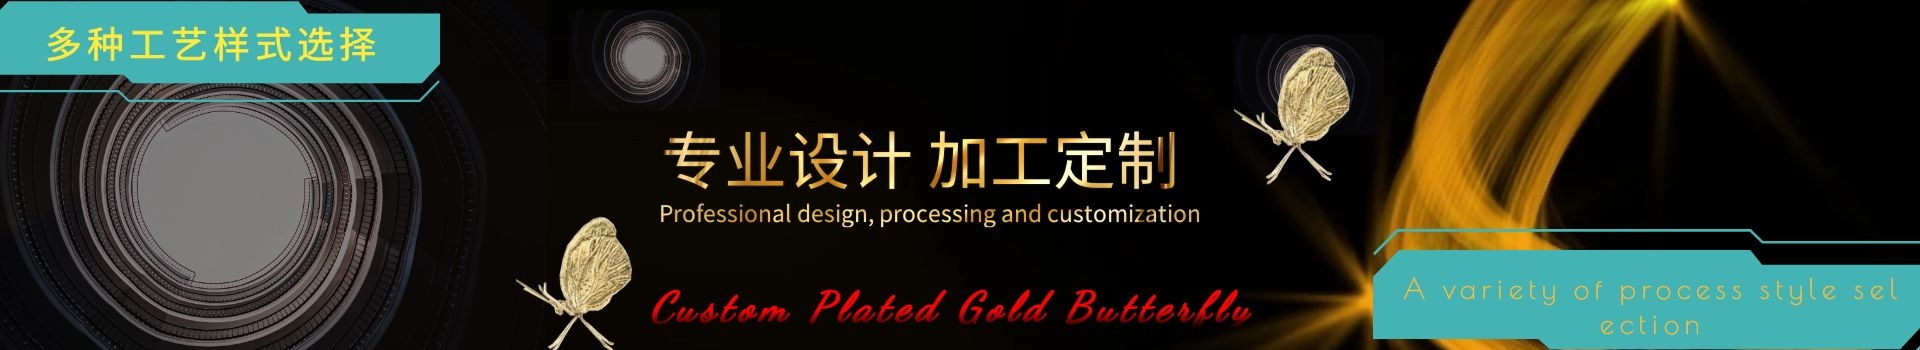 Dongguan xinzhirun Crafts Co., Ltd